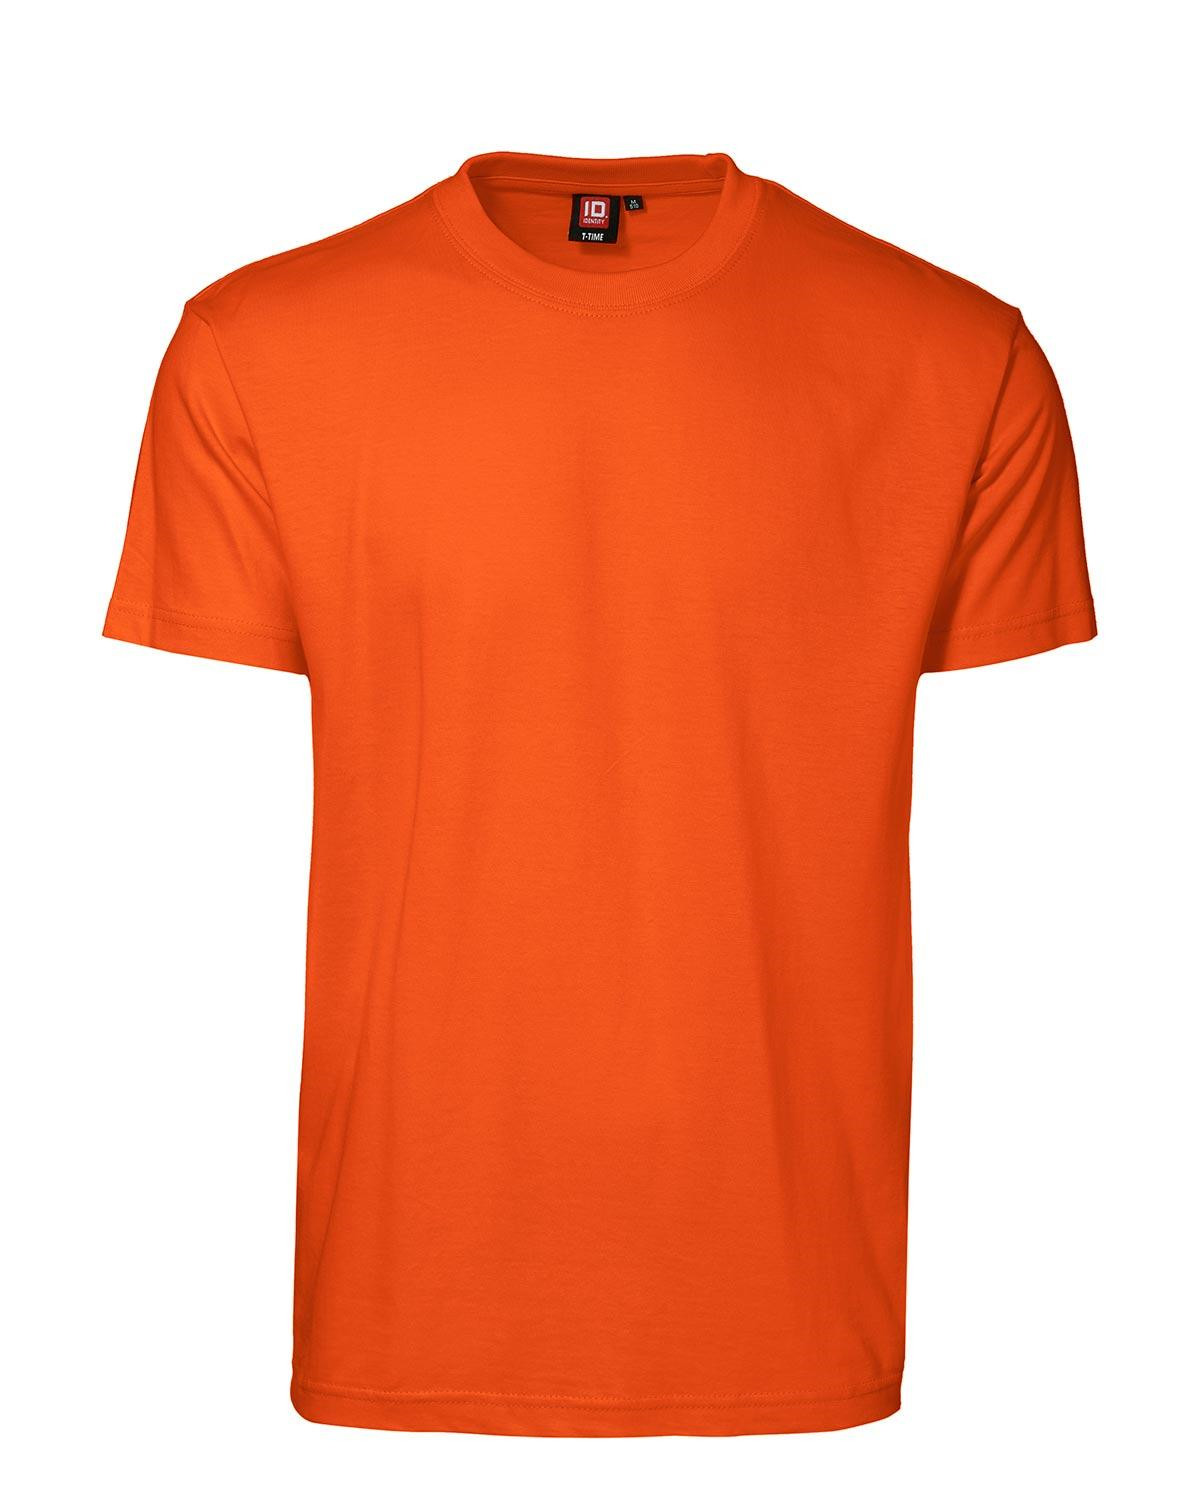 Billede af ID T-Time T-shirt, rund hals (Orange, L) hos Army Star